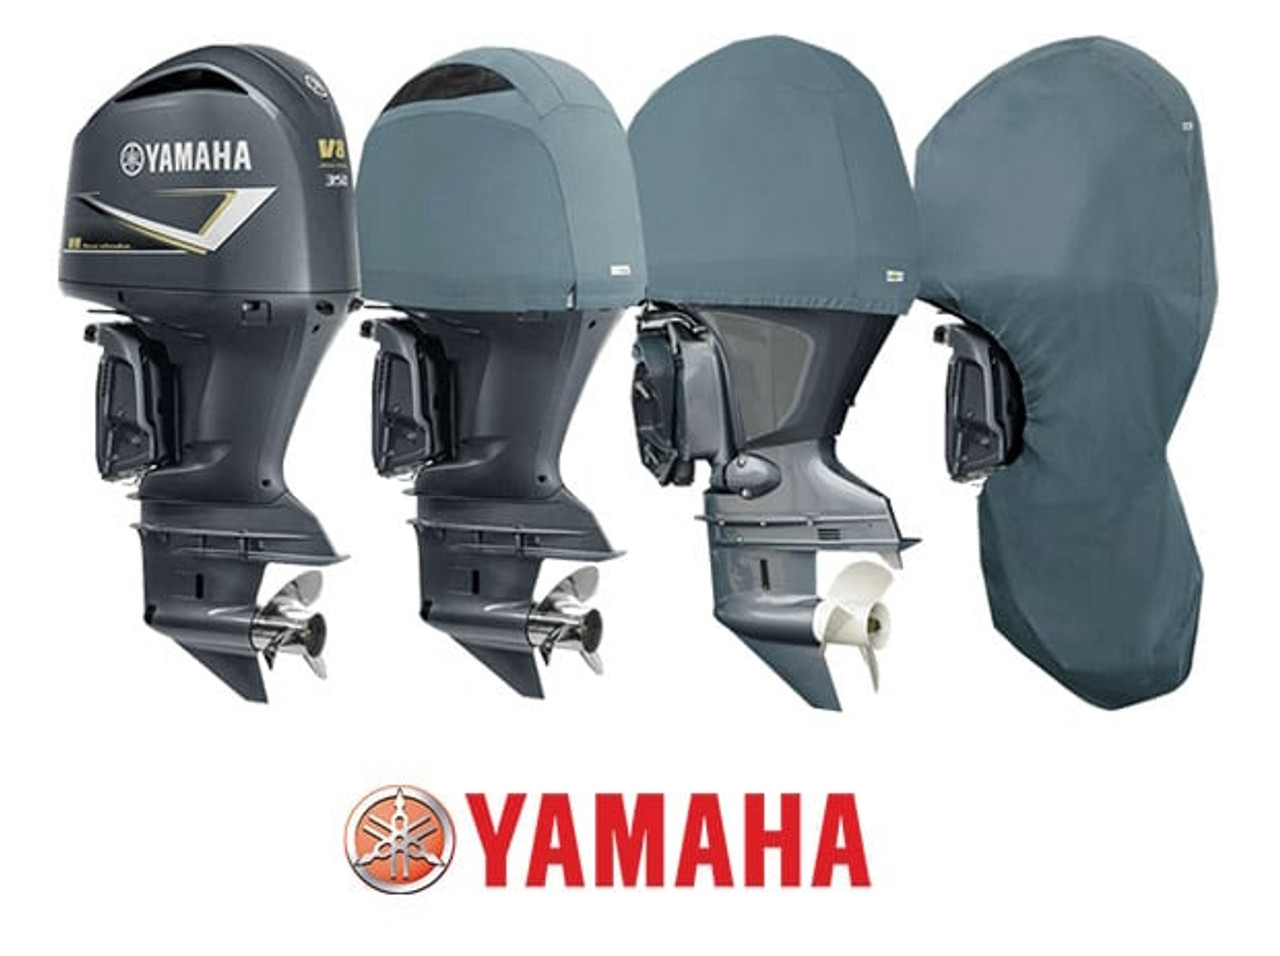 Yamaha Outboard Covers